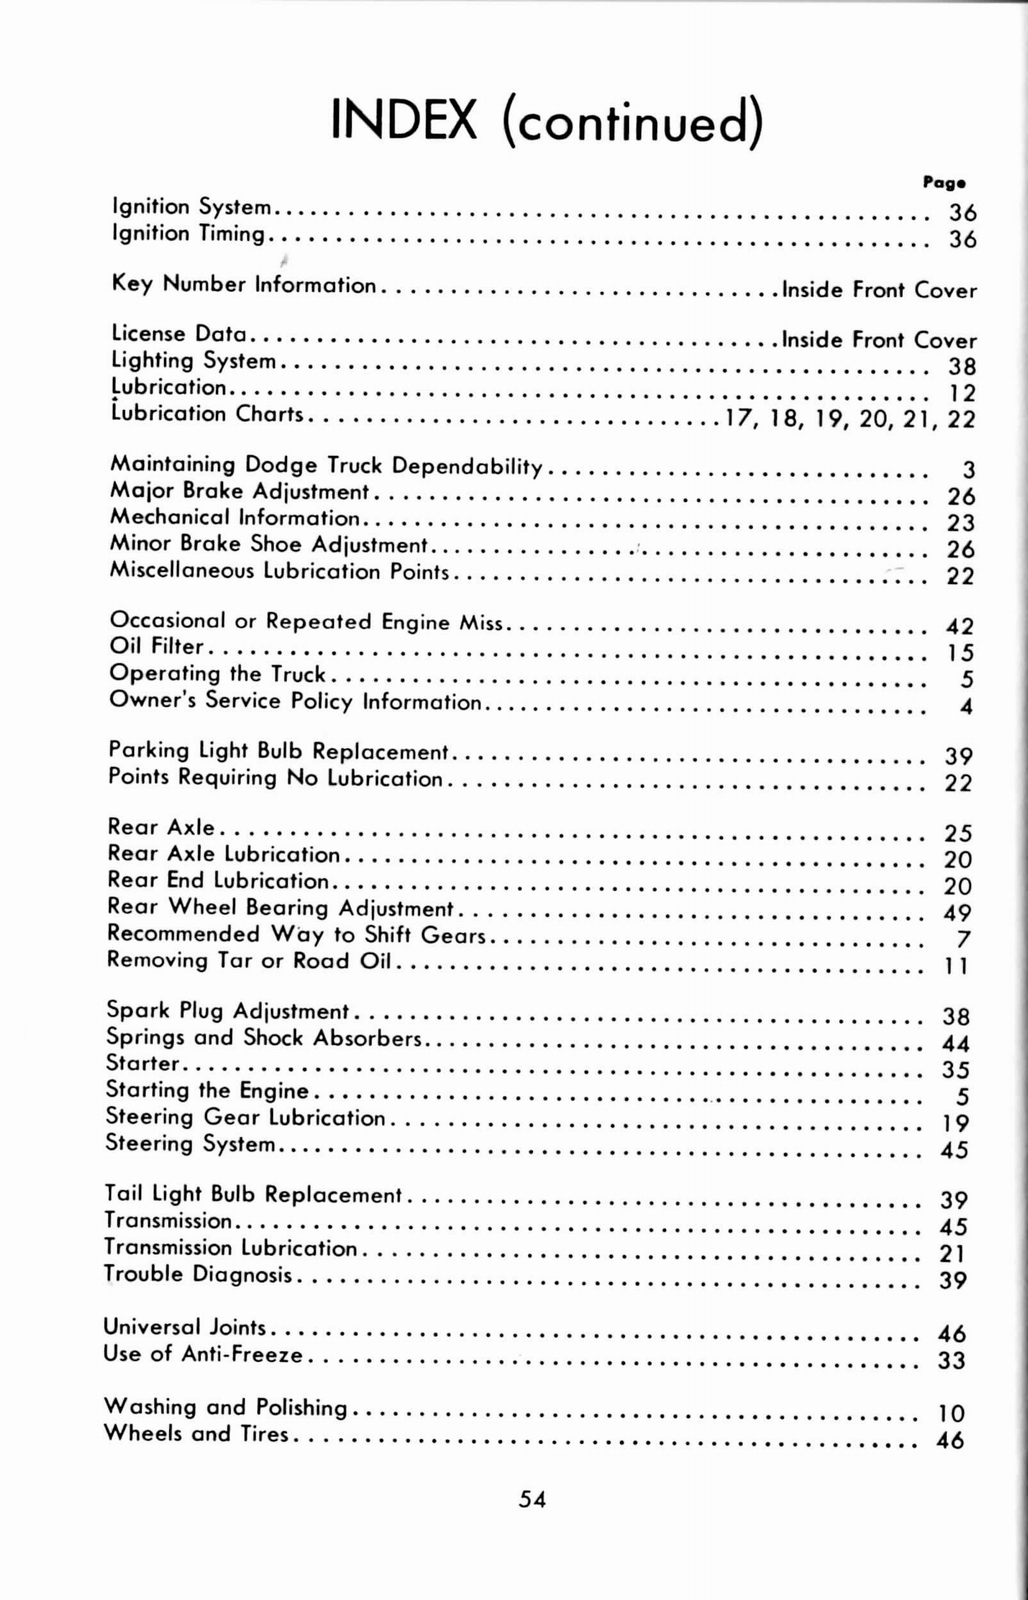 n_1949 Dodge Truck Manual-56.jpg